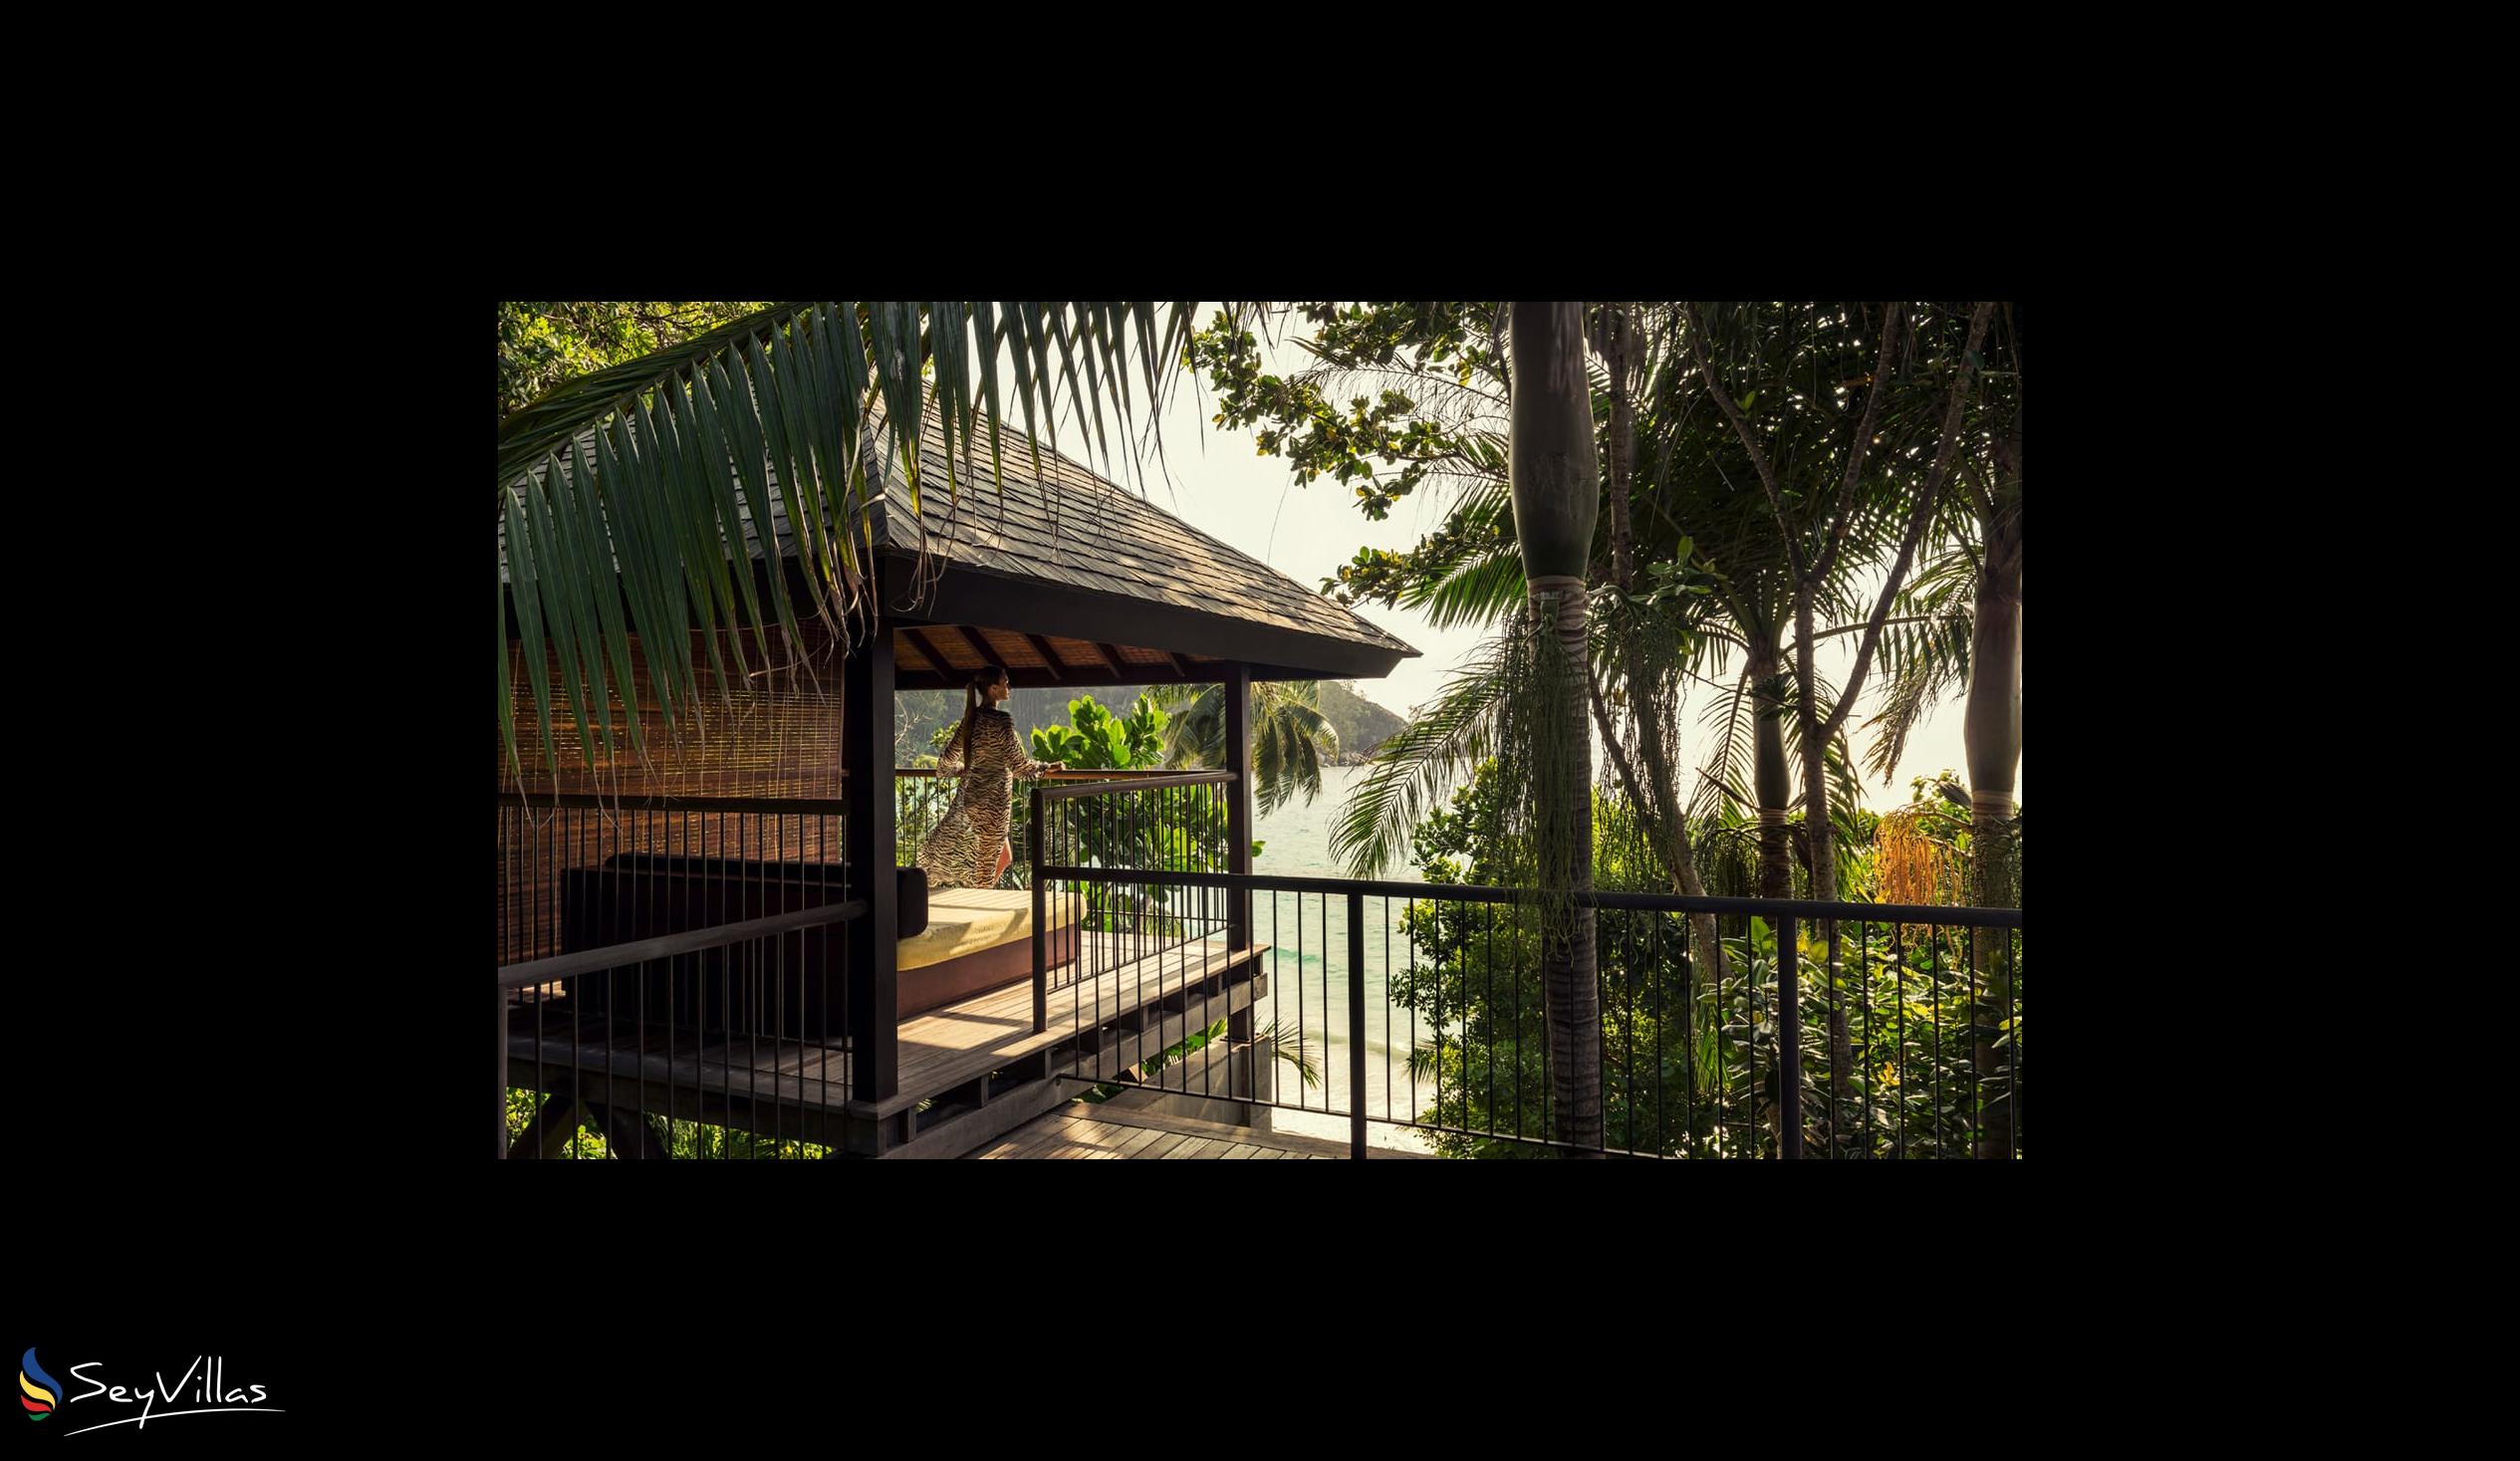 Photo 33: Four Seasons Resort - Ocean View Villa - Mahé (Seychelles)